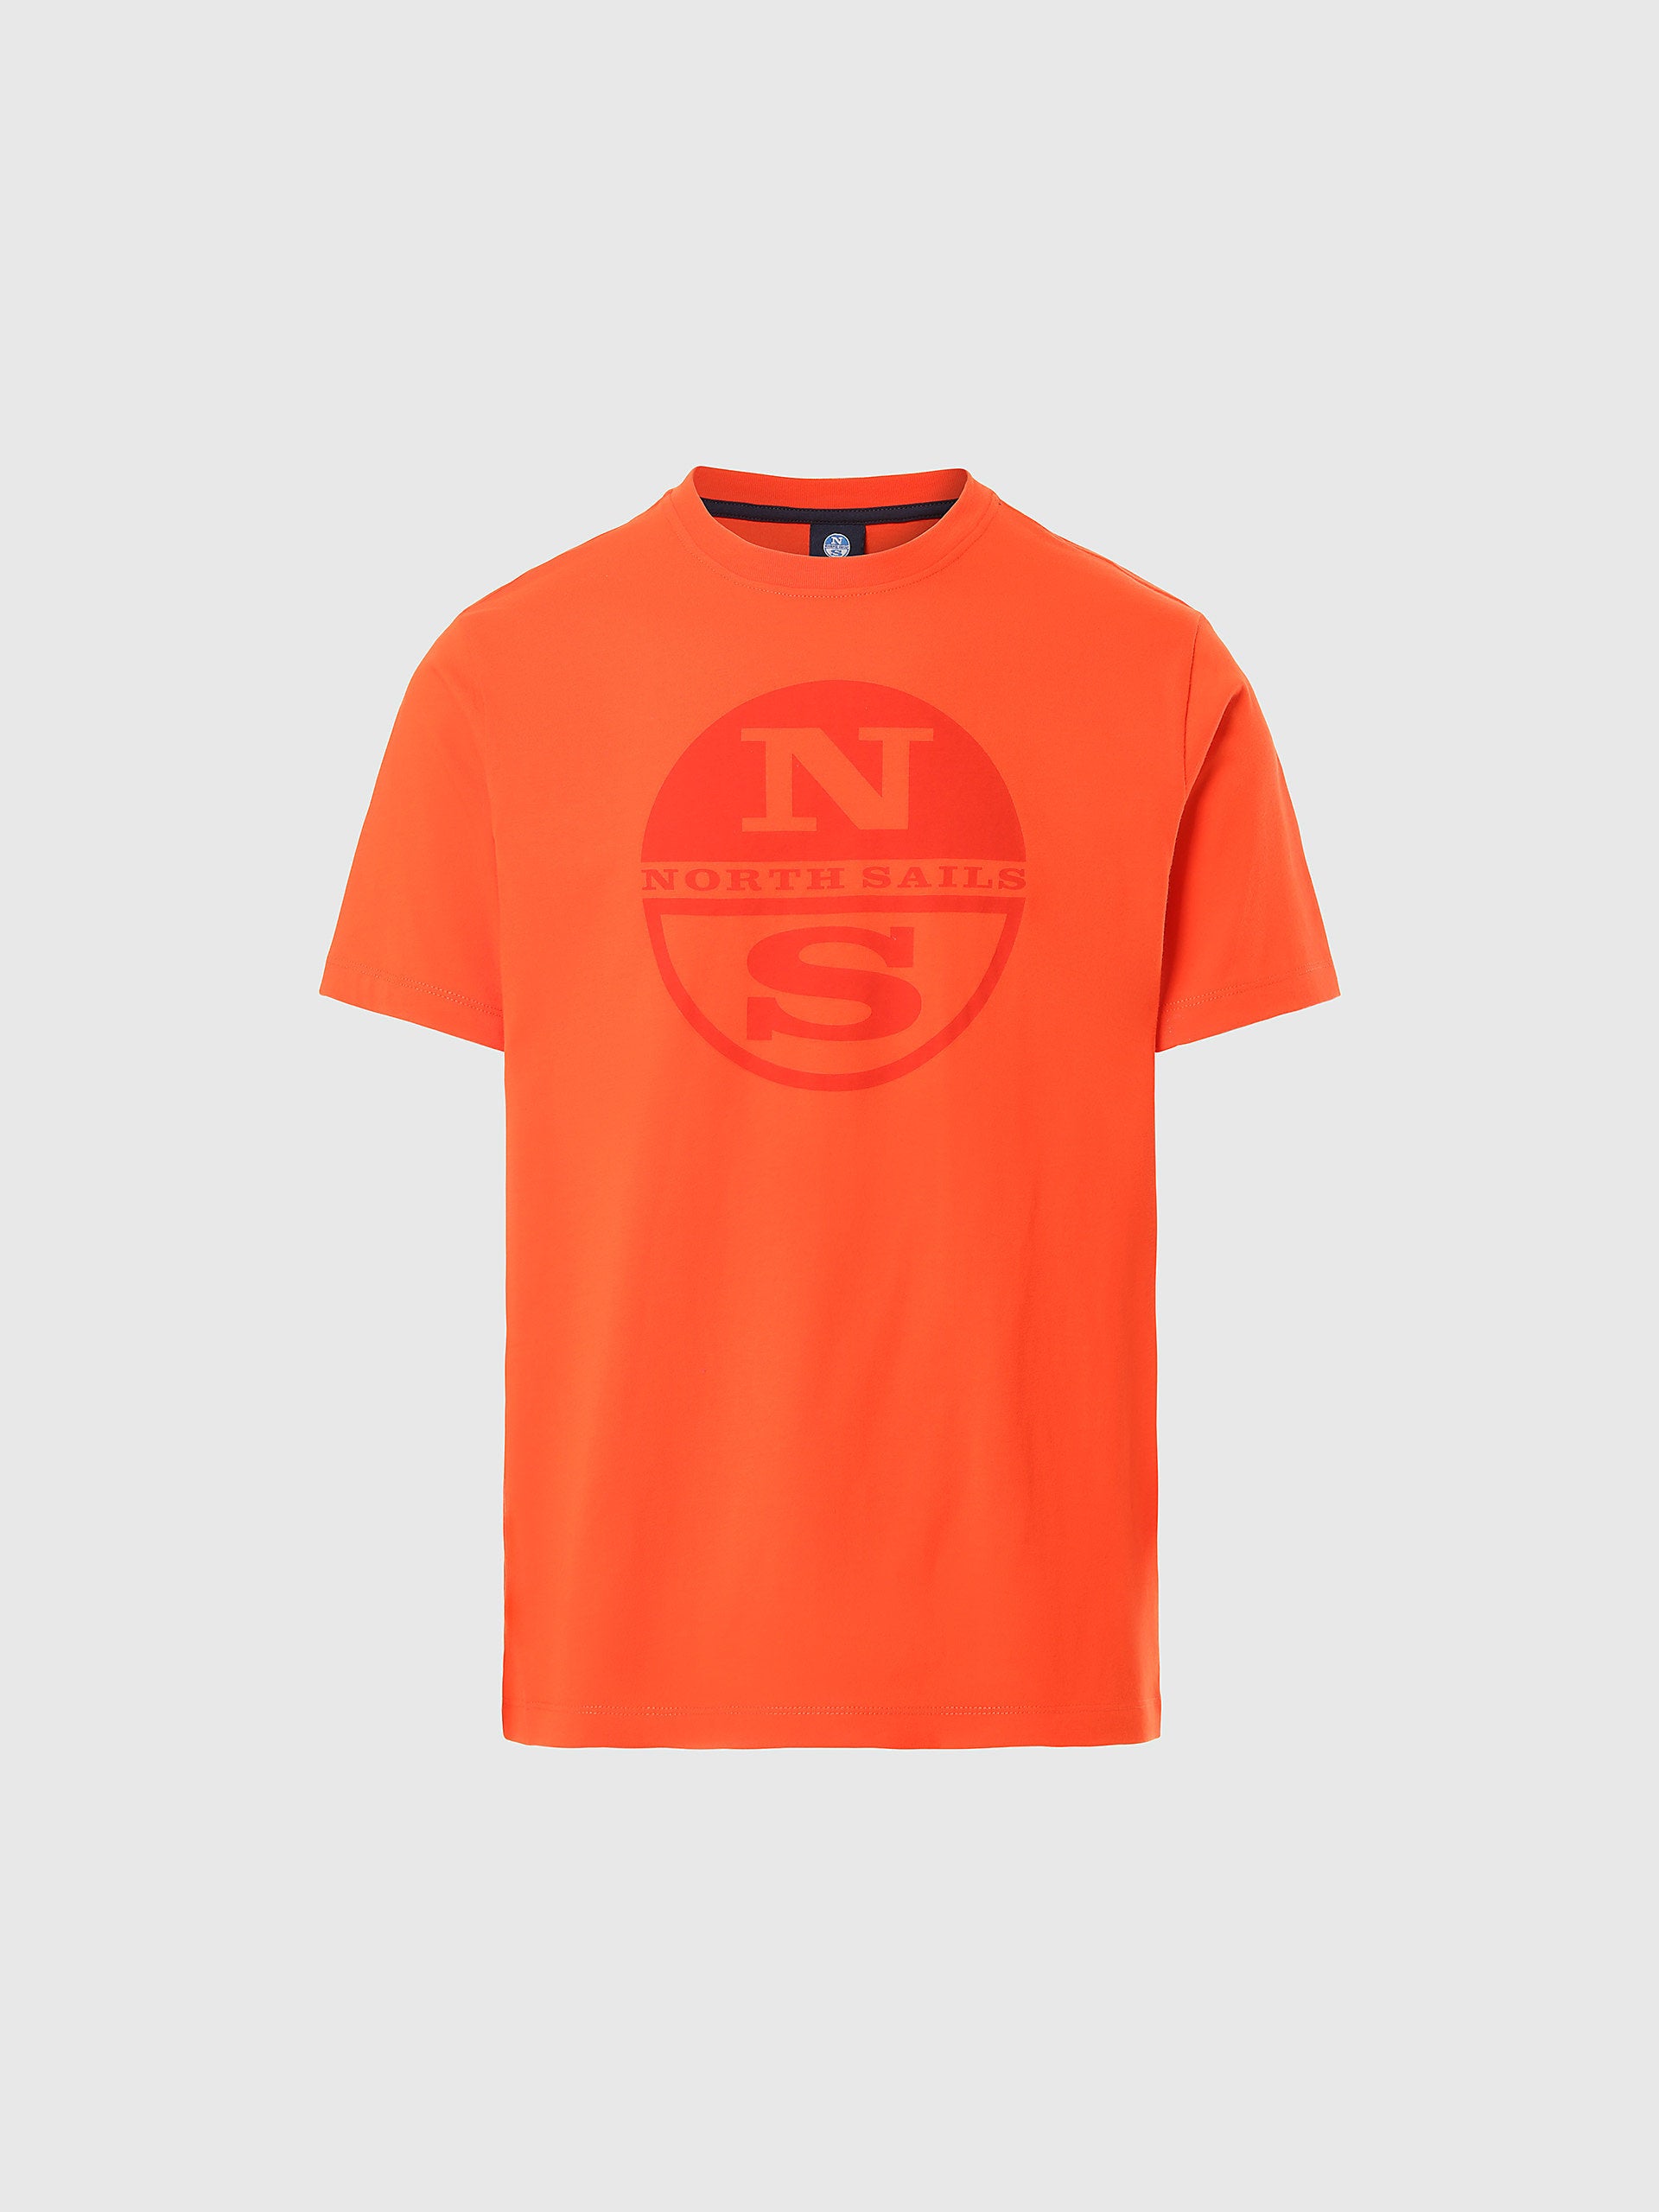 North Sails - T-shirt con stampa maxi logoNorth SailsBright orangeM